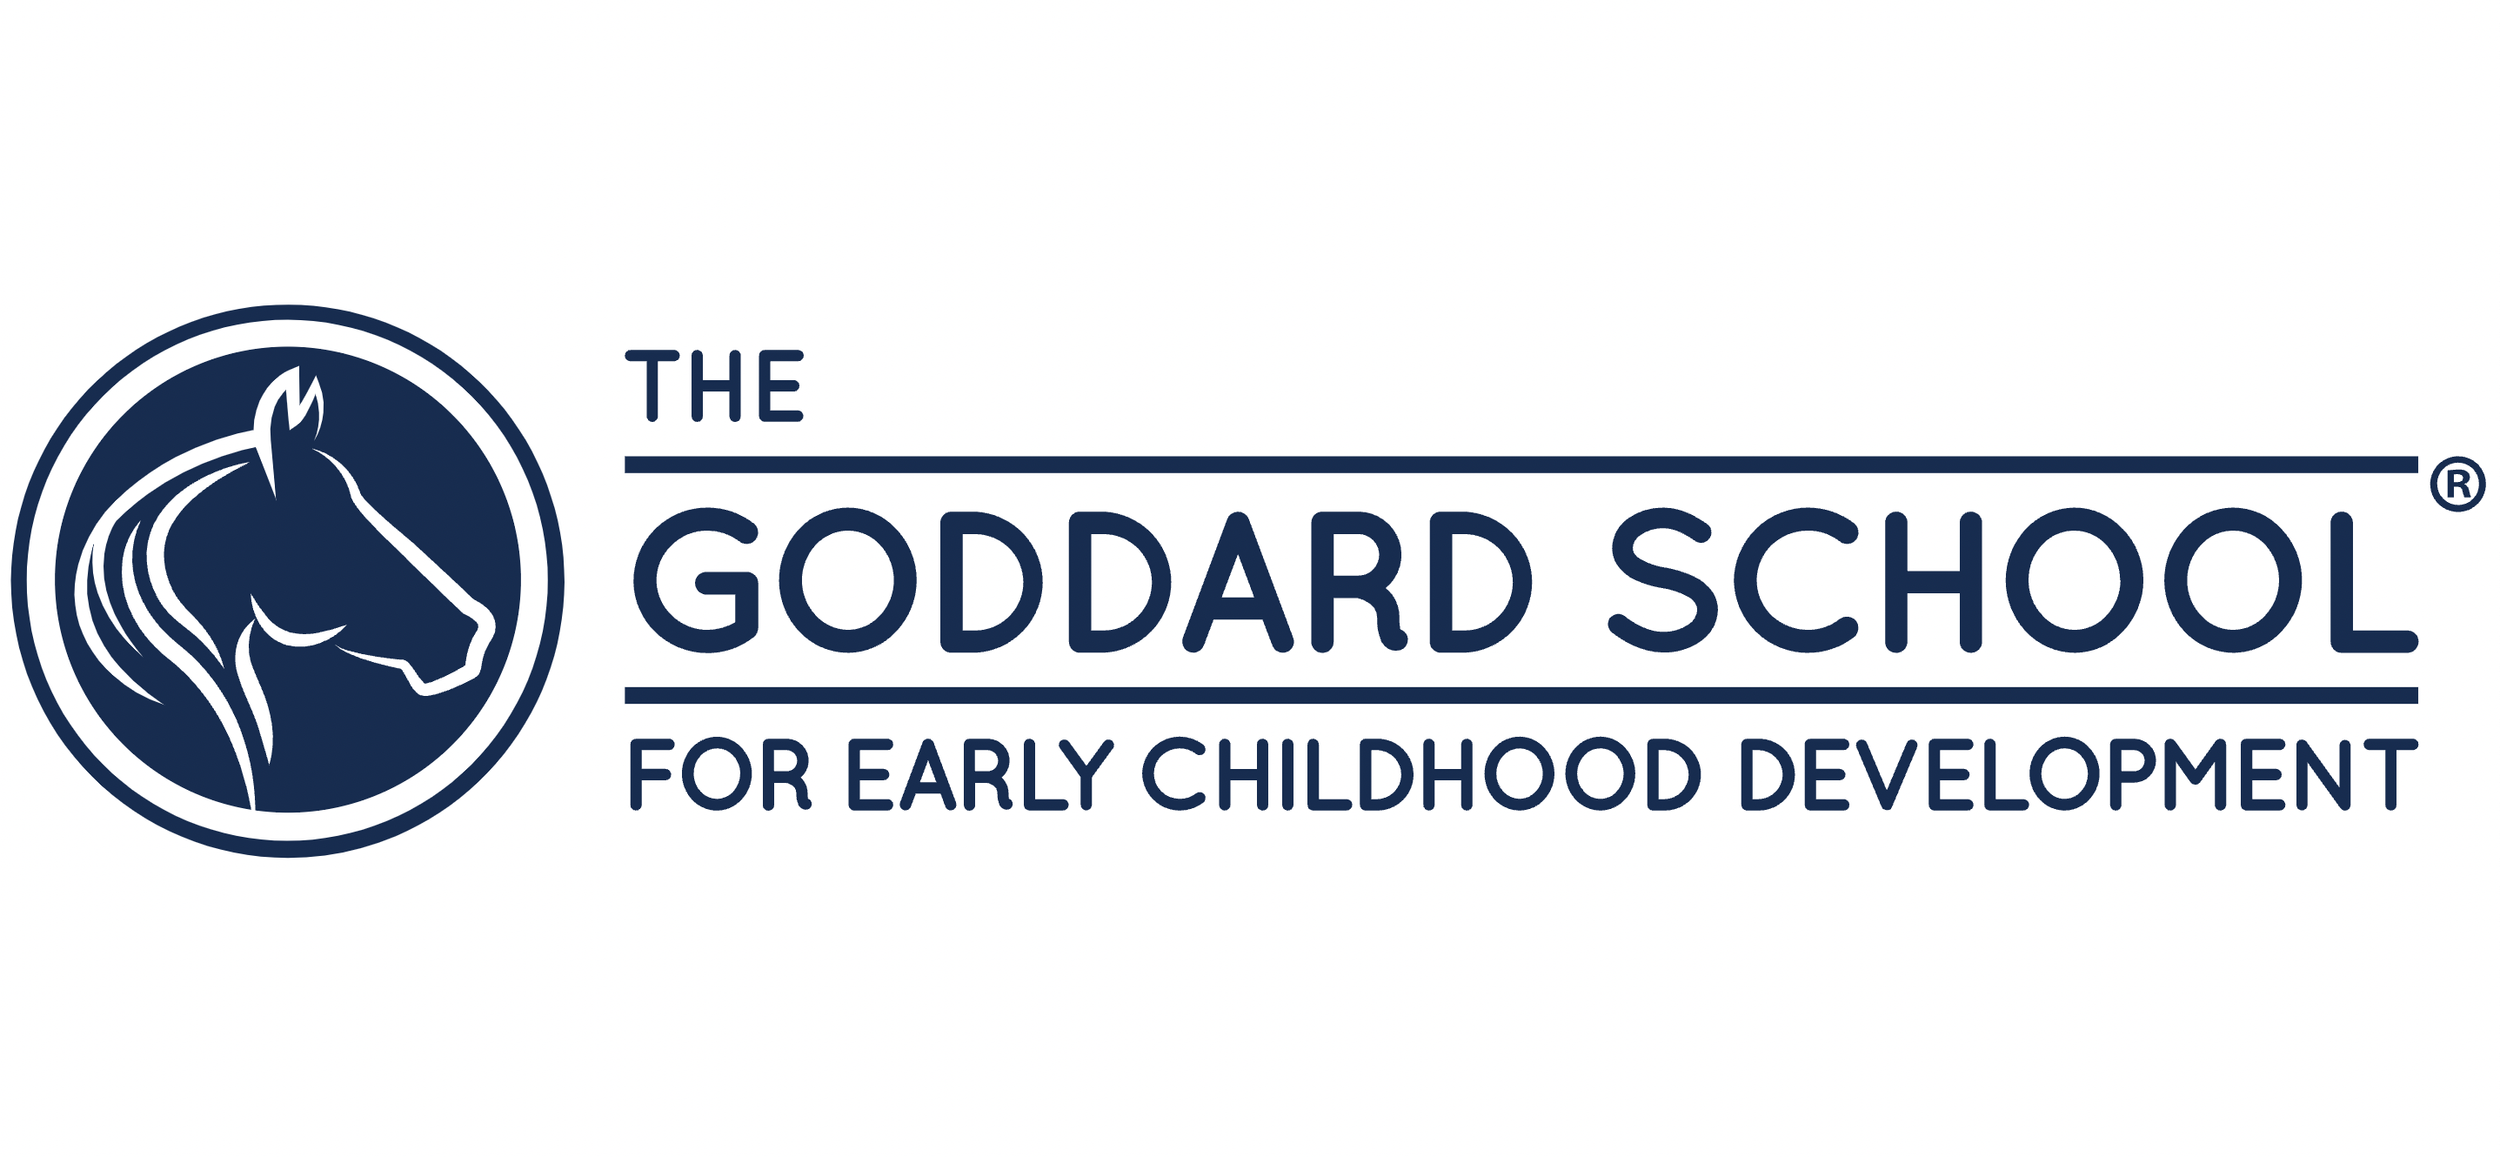 The Goddard School.png